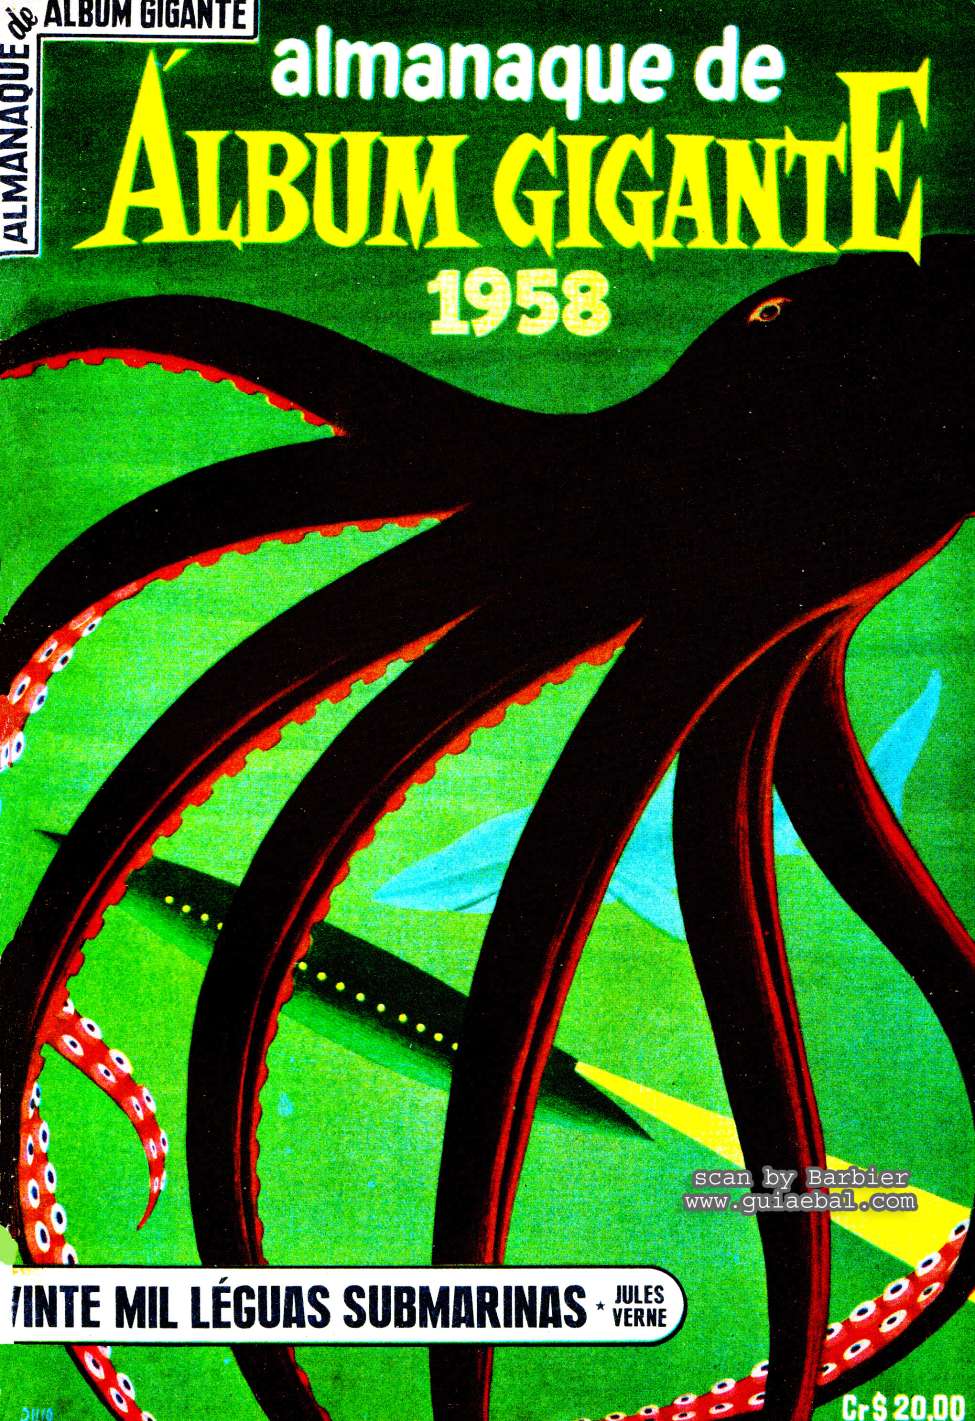 Comic Book Cover For Almanaque Album Gigante 1958 - Vinte Mil Leguas Submarinas